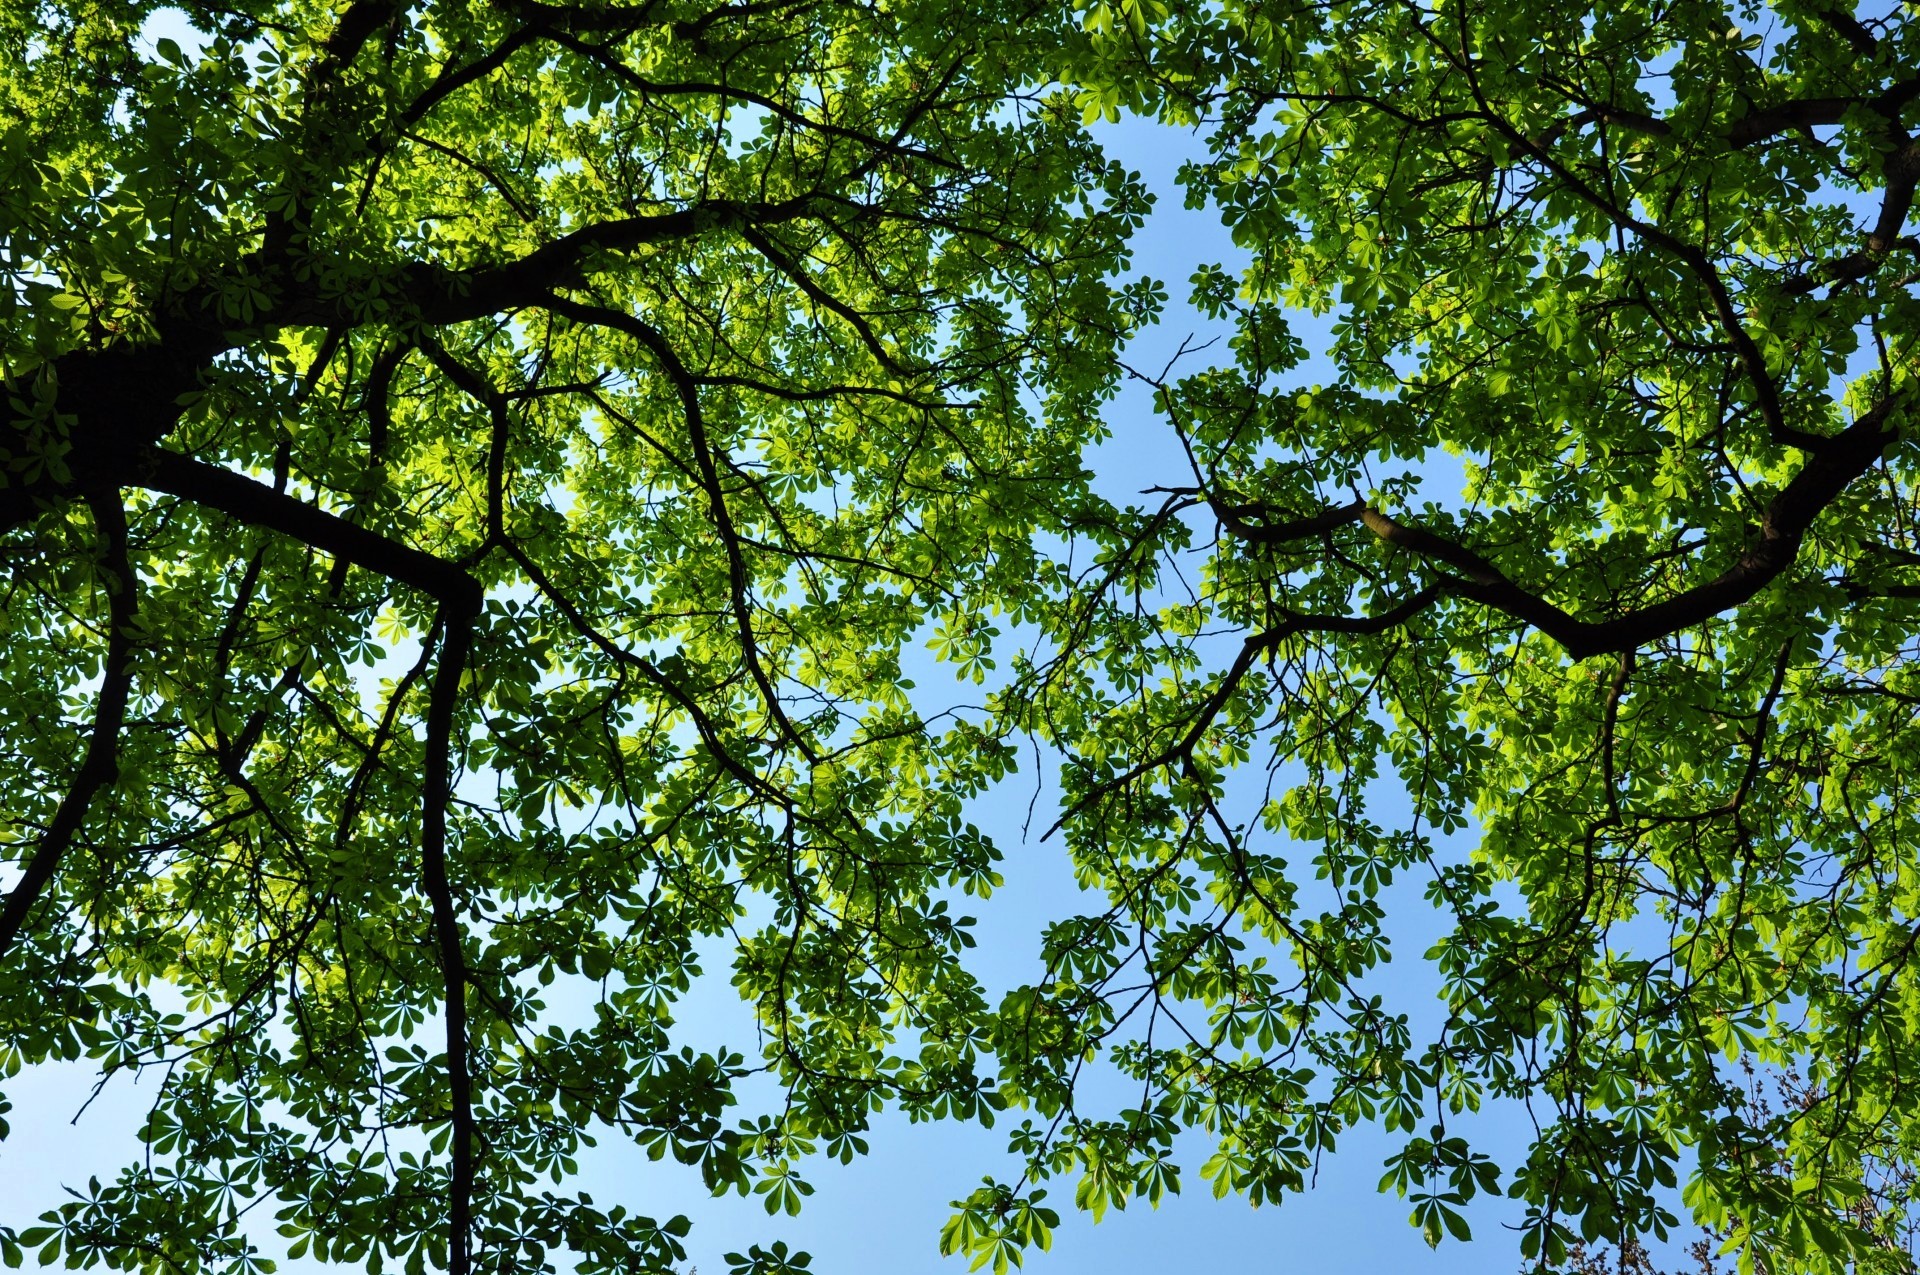 421309 descargar imagen tierra/naturaleza, árbol, pabellón, verde, árboles: fondos de pantalla y protectores de pantalla gratis